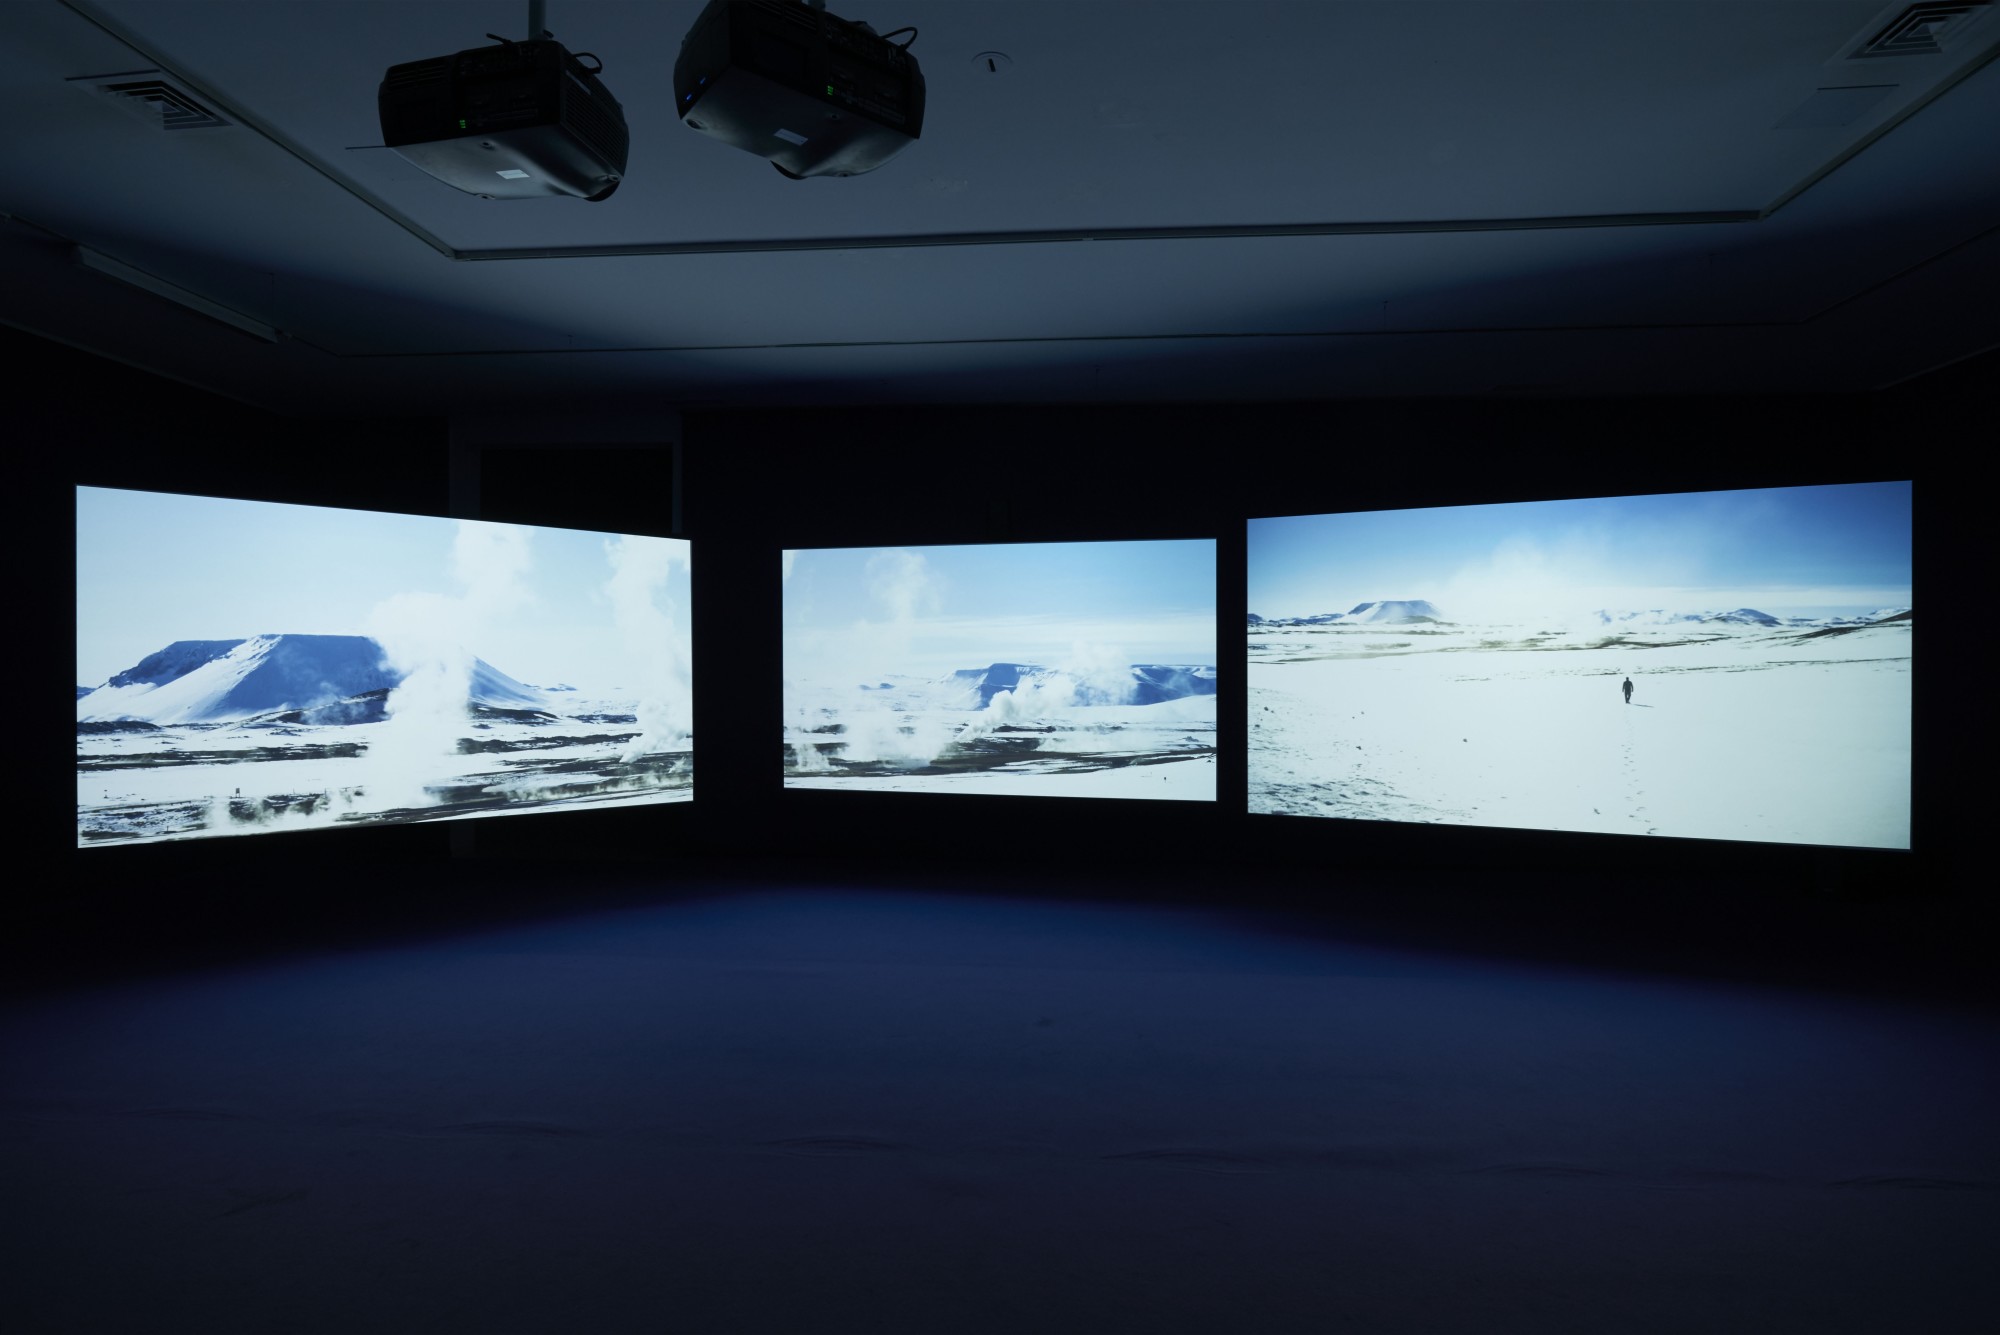 Playtime. Galería Helga de Alvear, Madrid, 2015  Three screen high definition video installation with 5.1 surround sound  64'12''